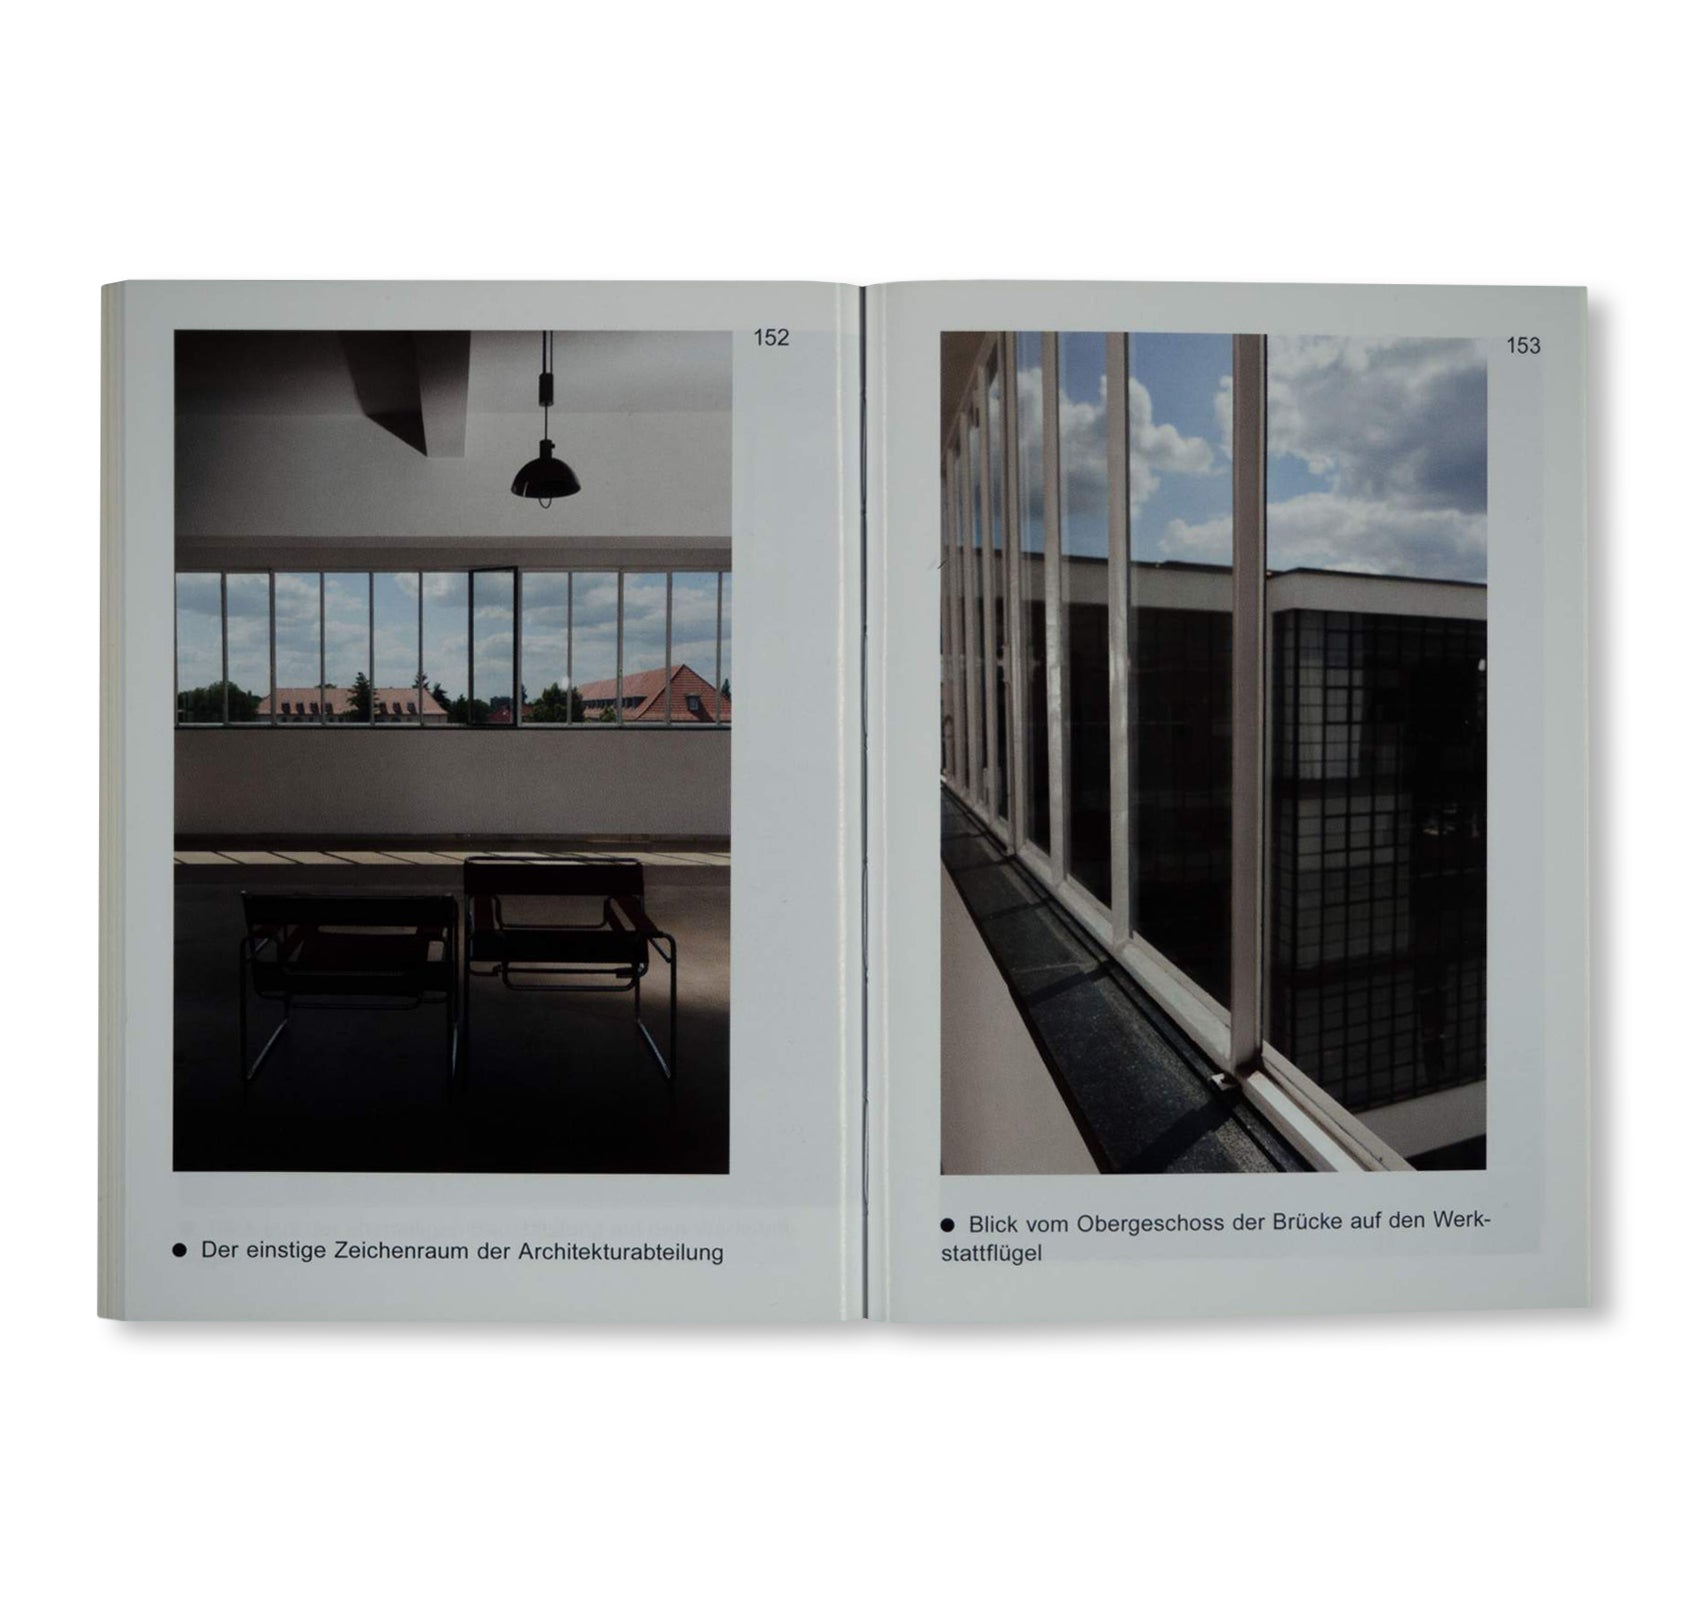 DAS BAUHAUSGEBÄUDE IN DESSAU / Bauhaus Paperback 5 by Christin Irrgang, Ingolf Kern, Stiftung Bauhaus Dessau [GERMAN EDITION]